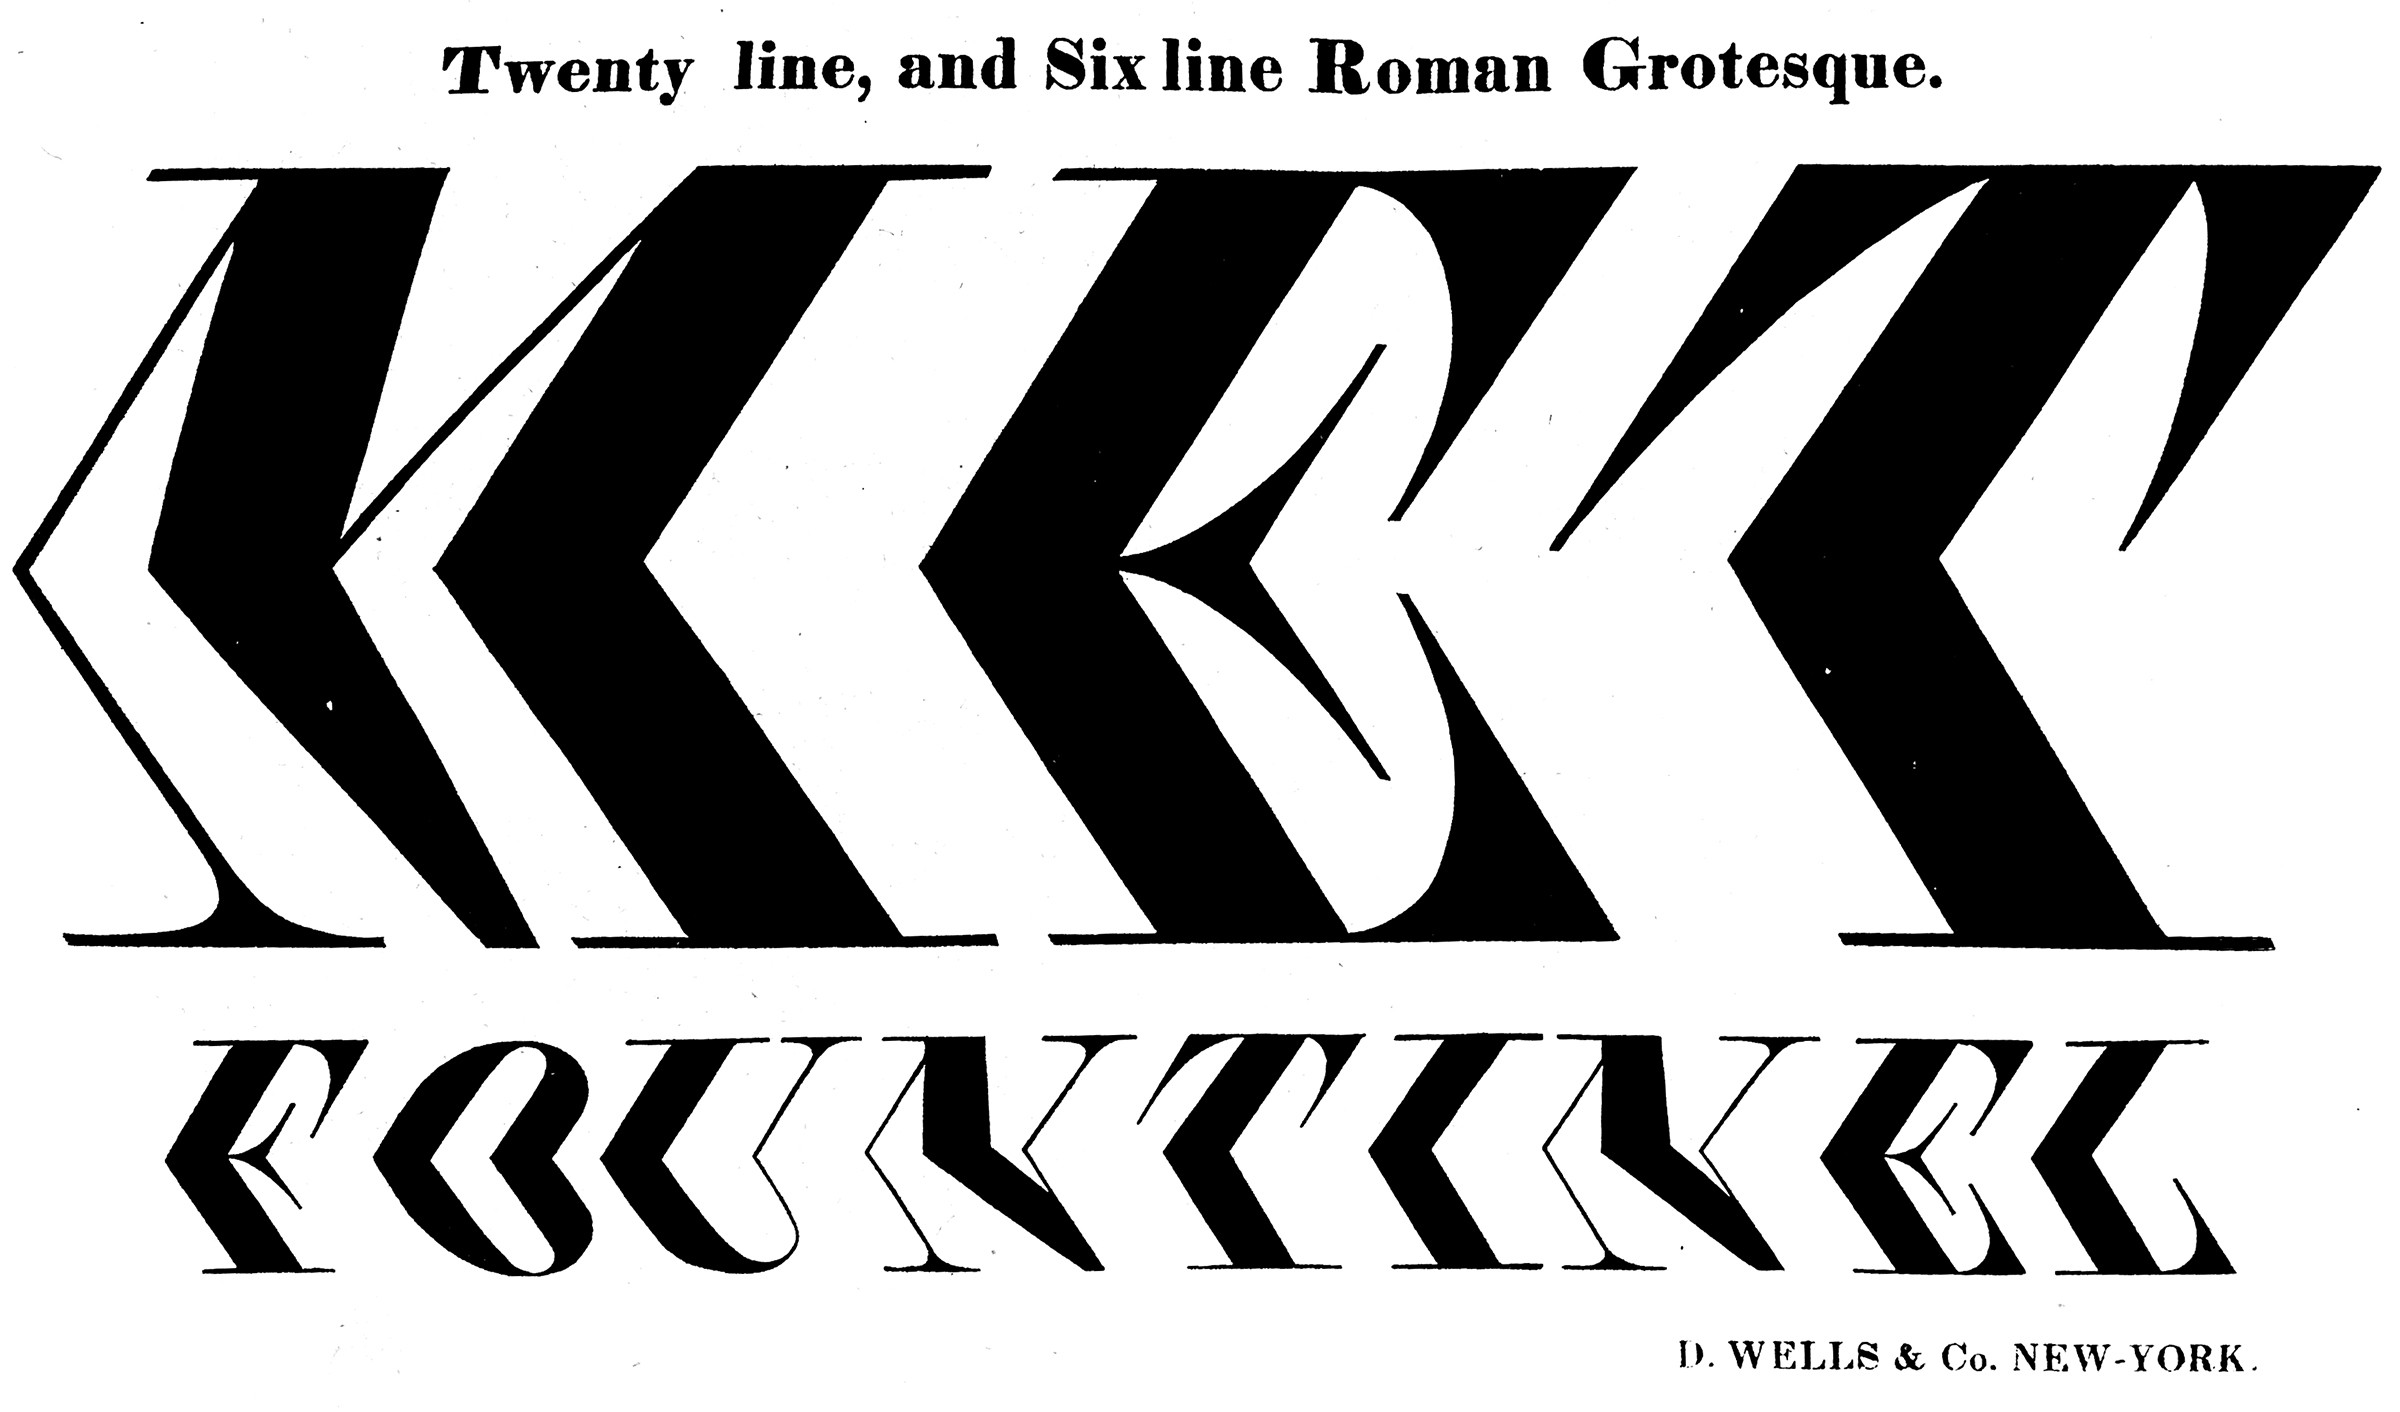 Twenty line, and Six line Roman Grotesque. D. Wells & Co. NEW-YORK.